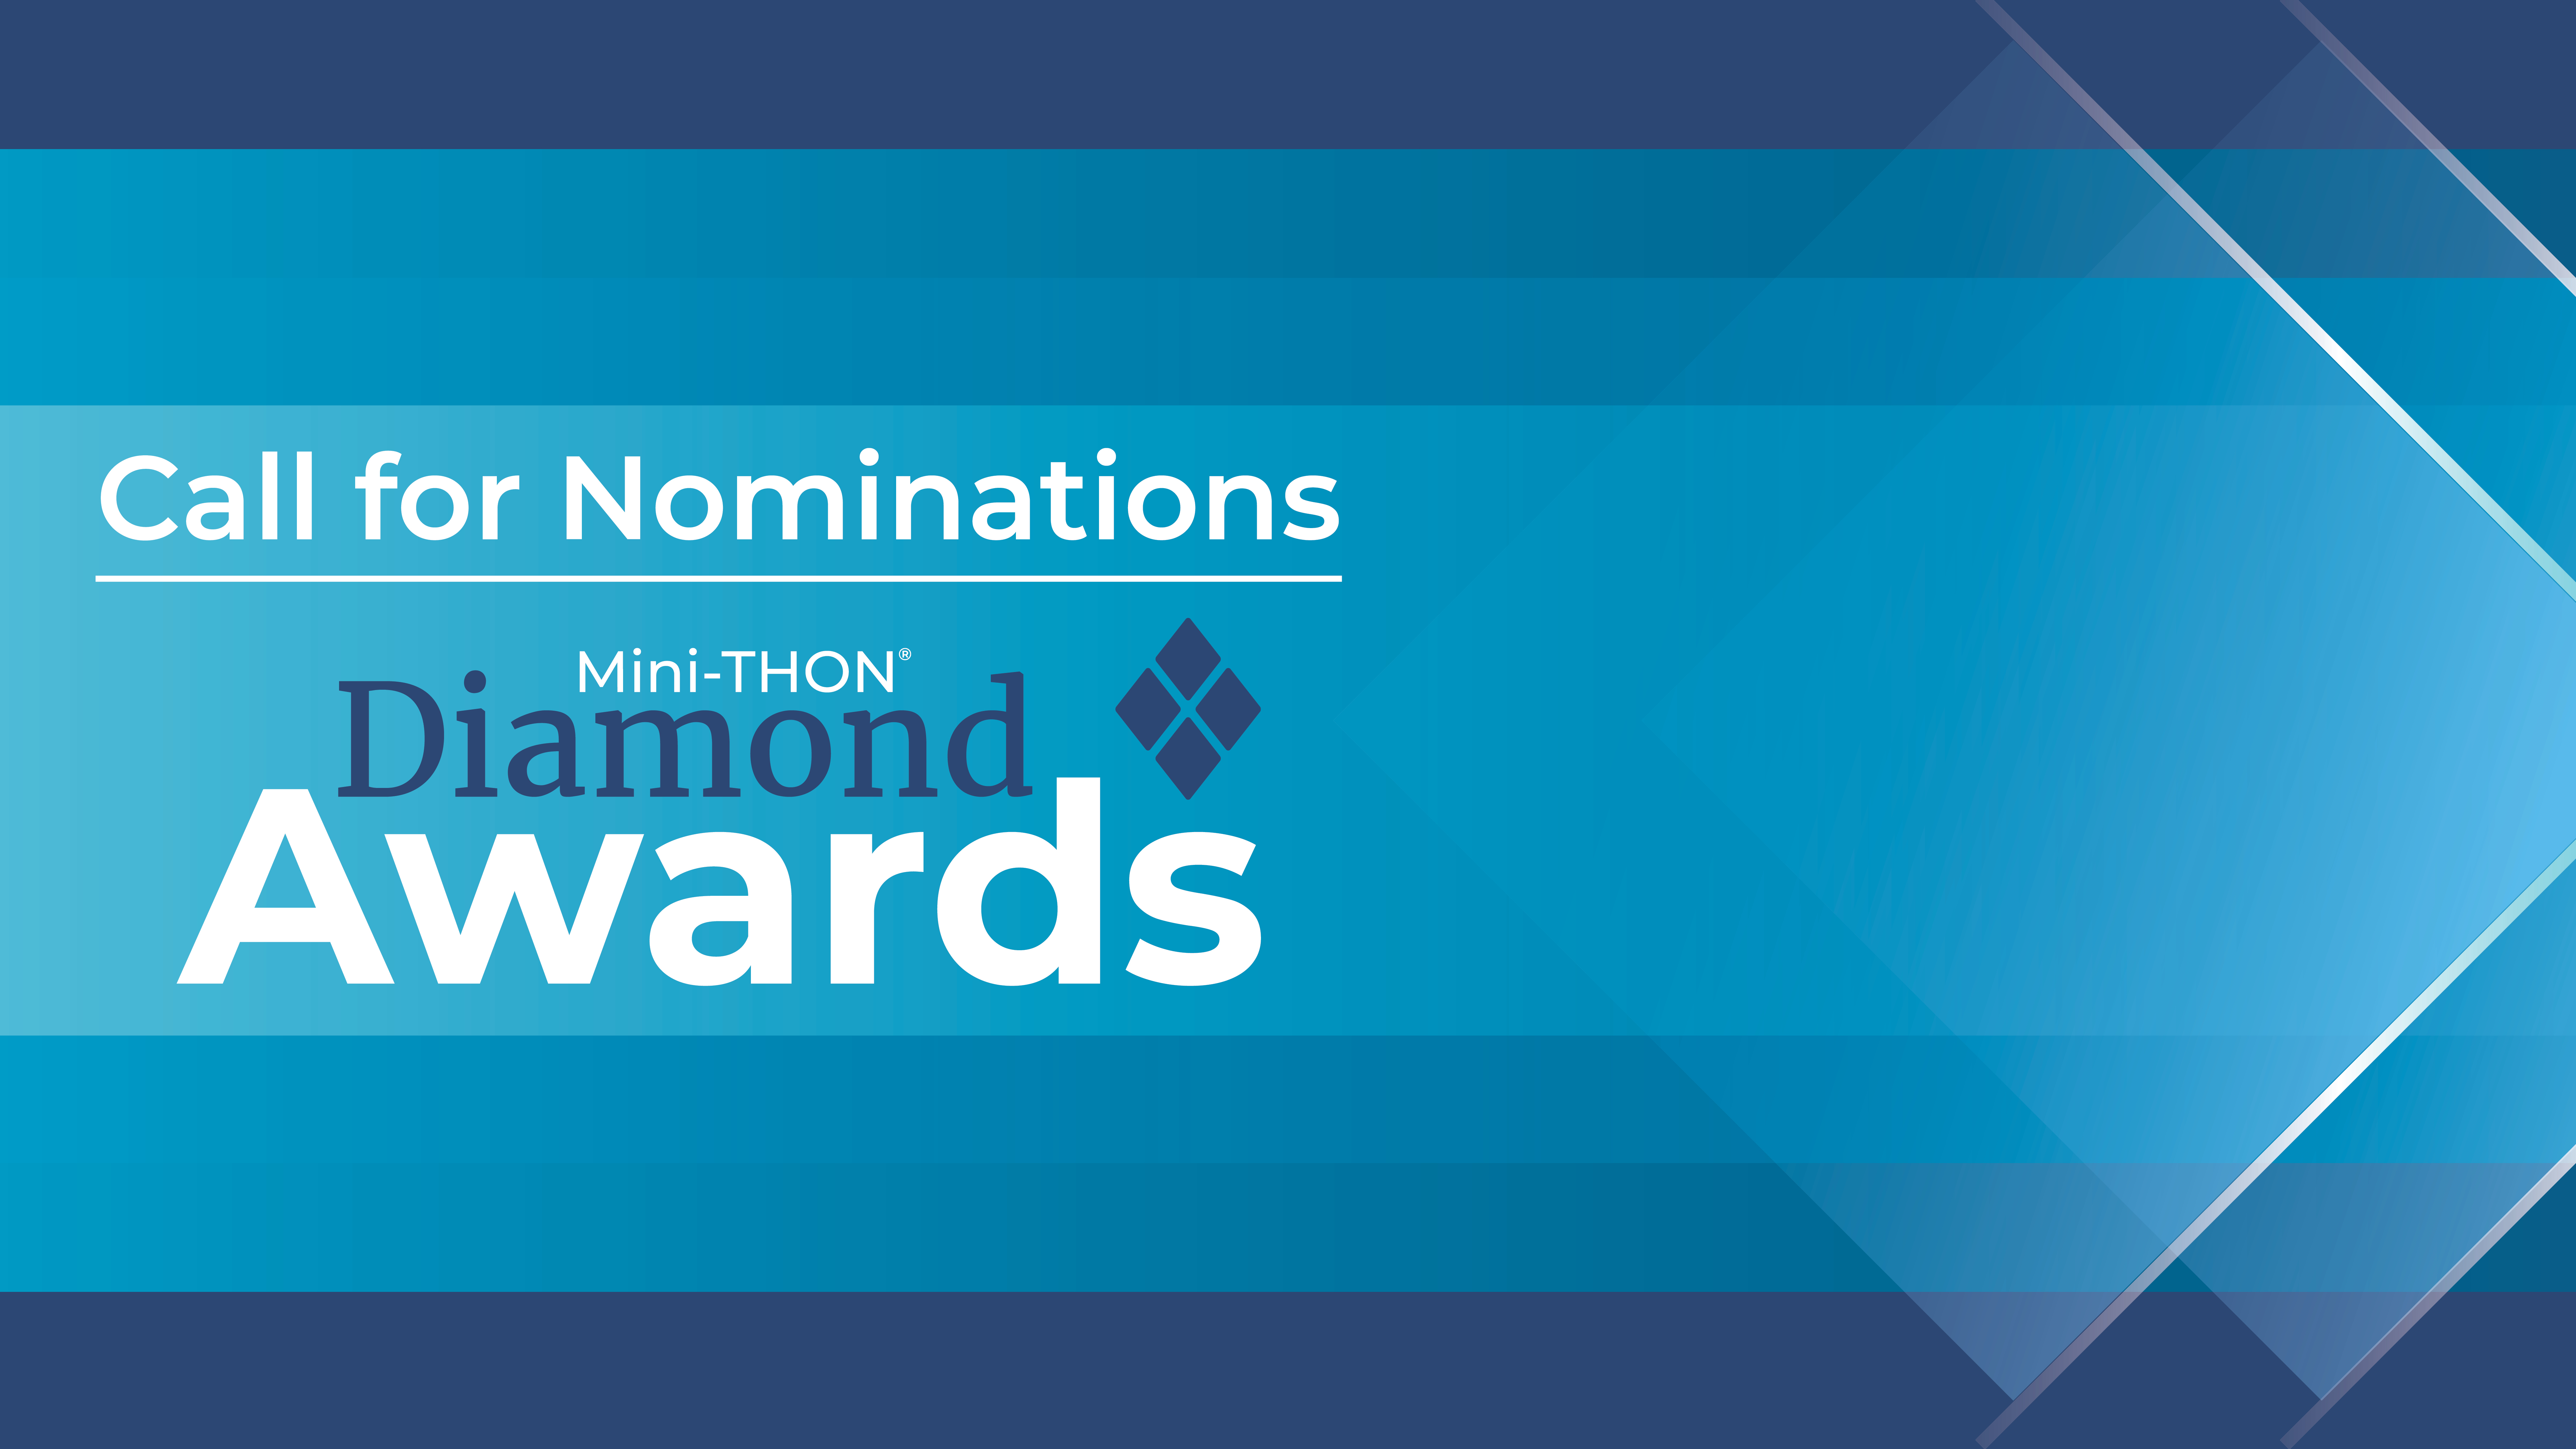 Call for Nominations: Mini-THON Diamond Awards 450